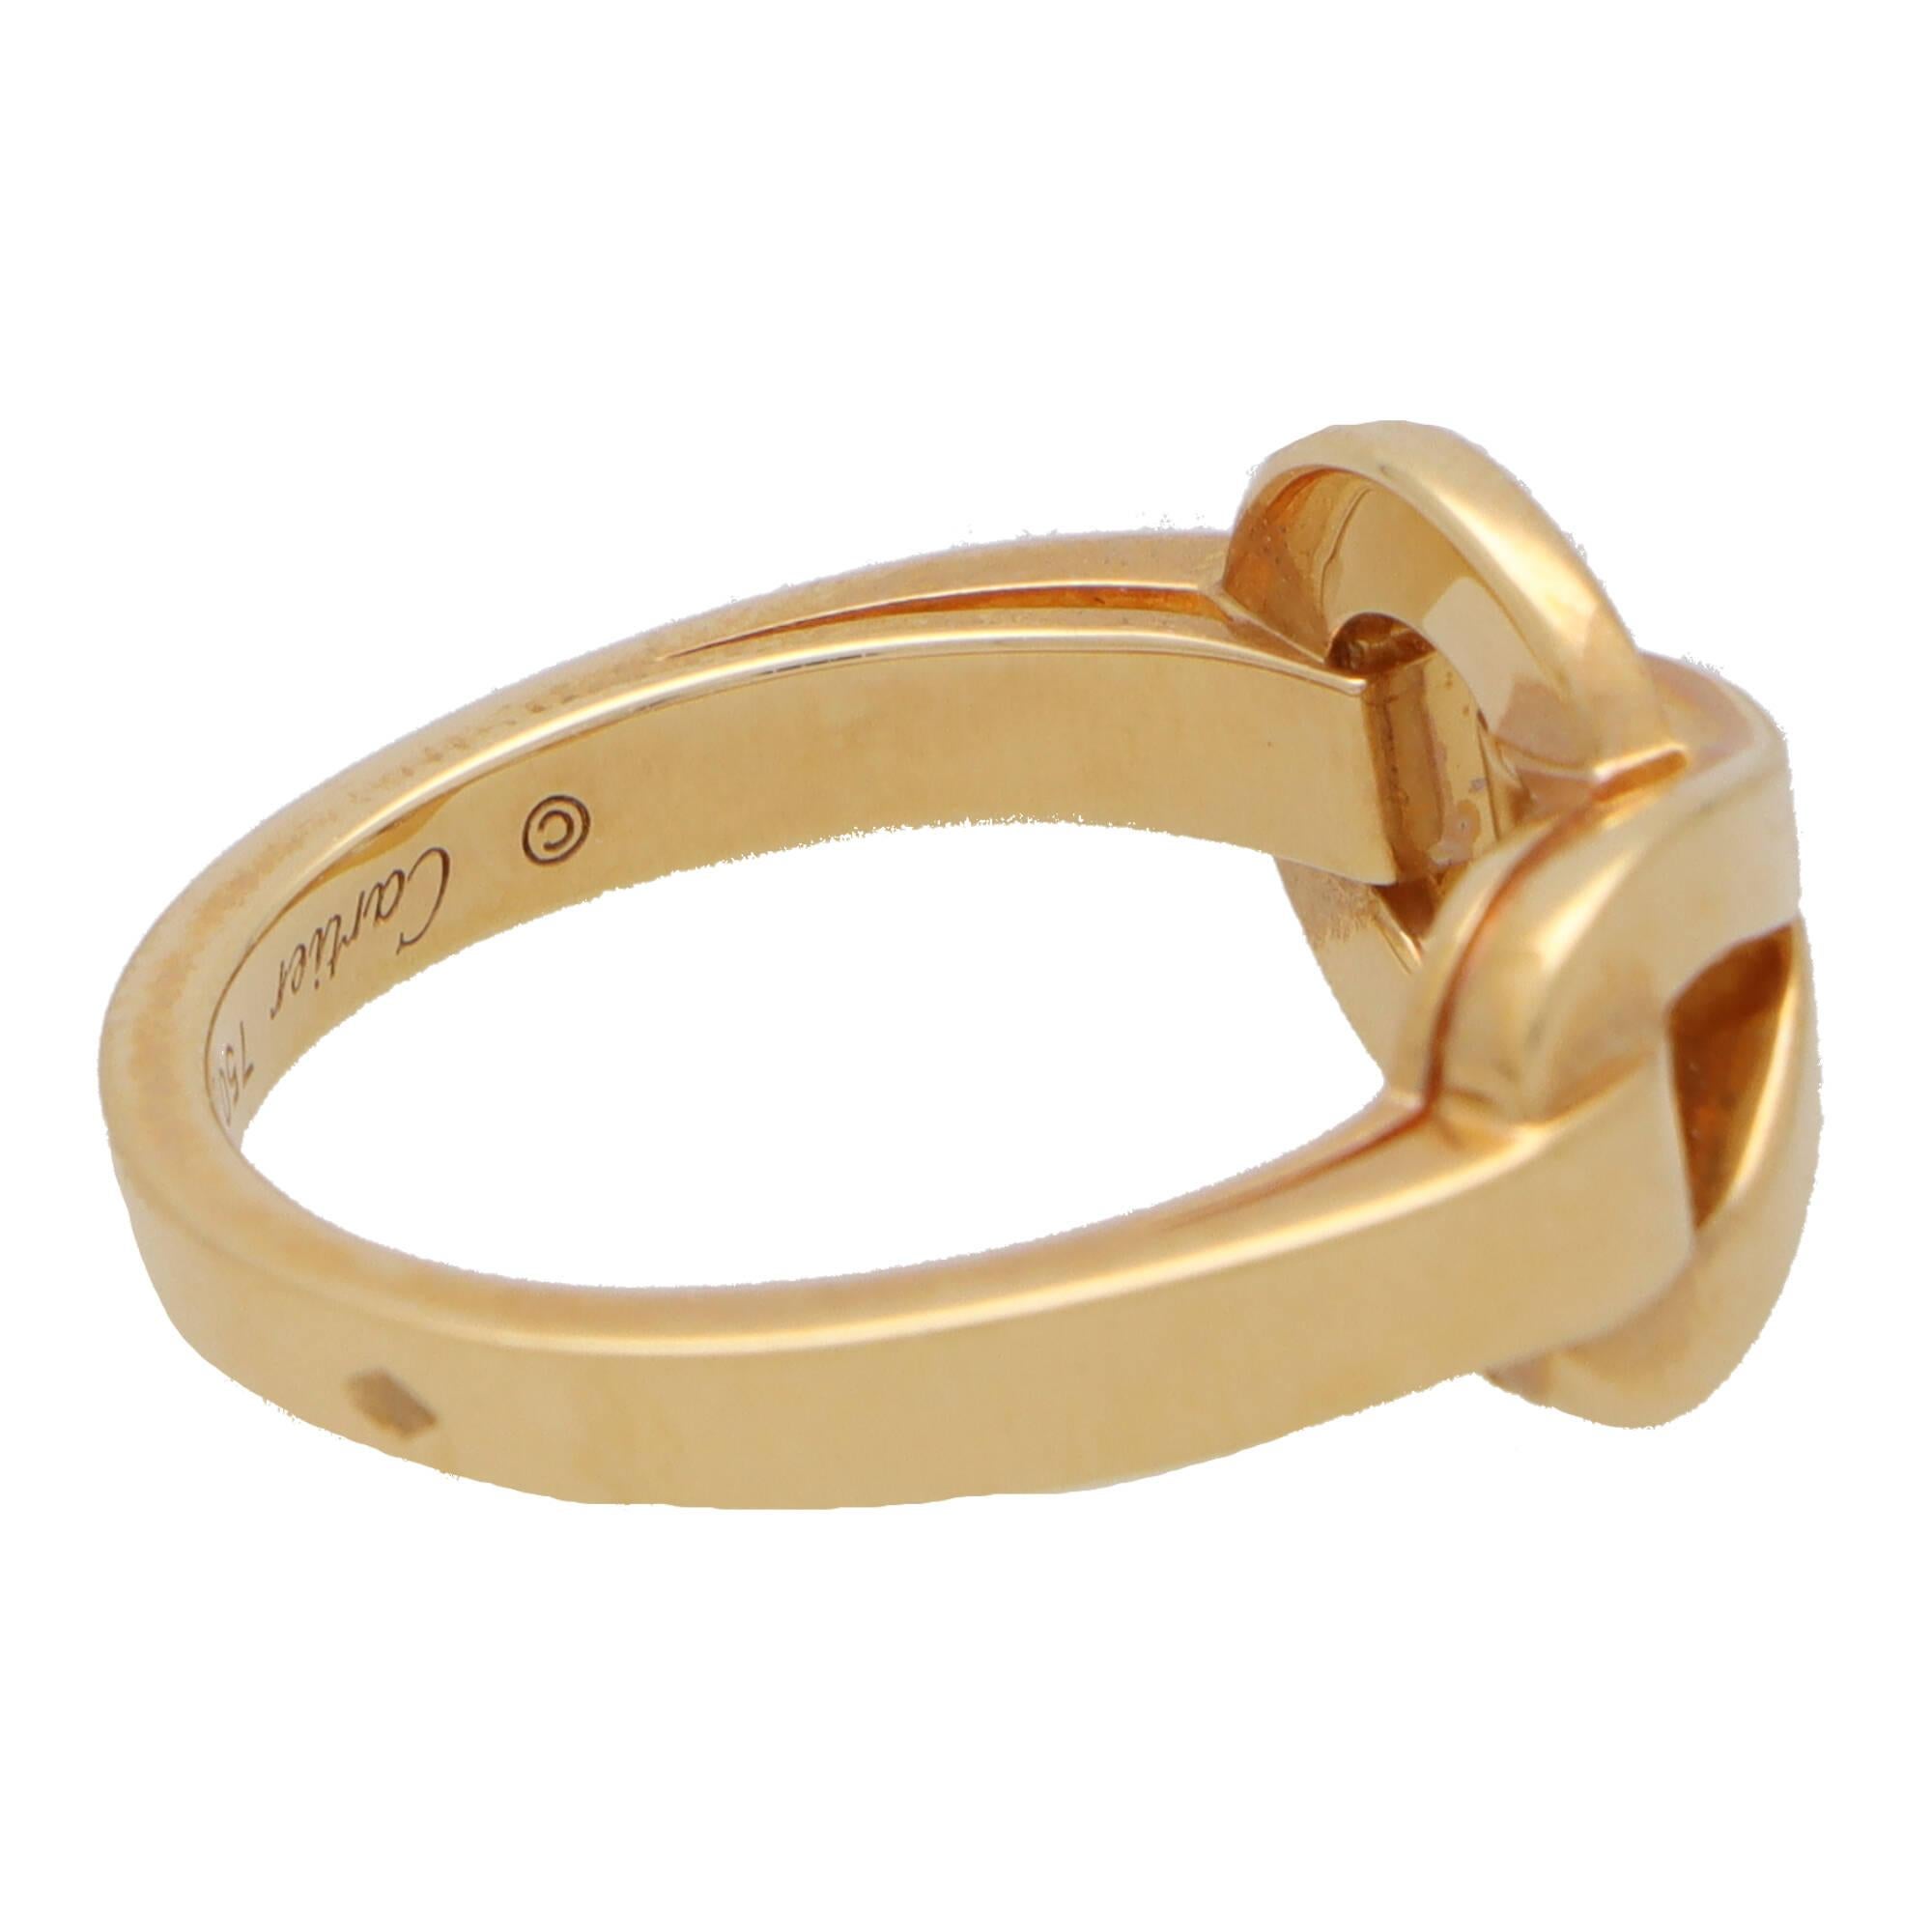 Modern Vintage Cartier Agrafe Dress Ring Set in 18k Yellow Gold